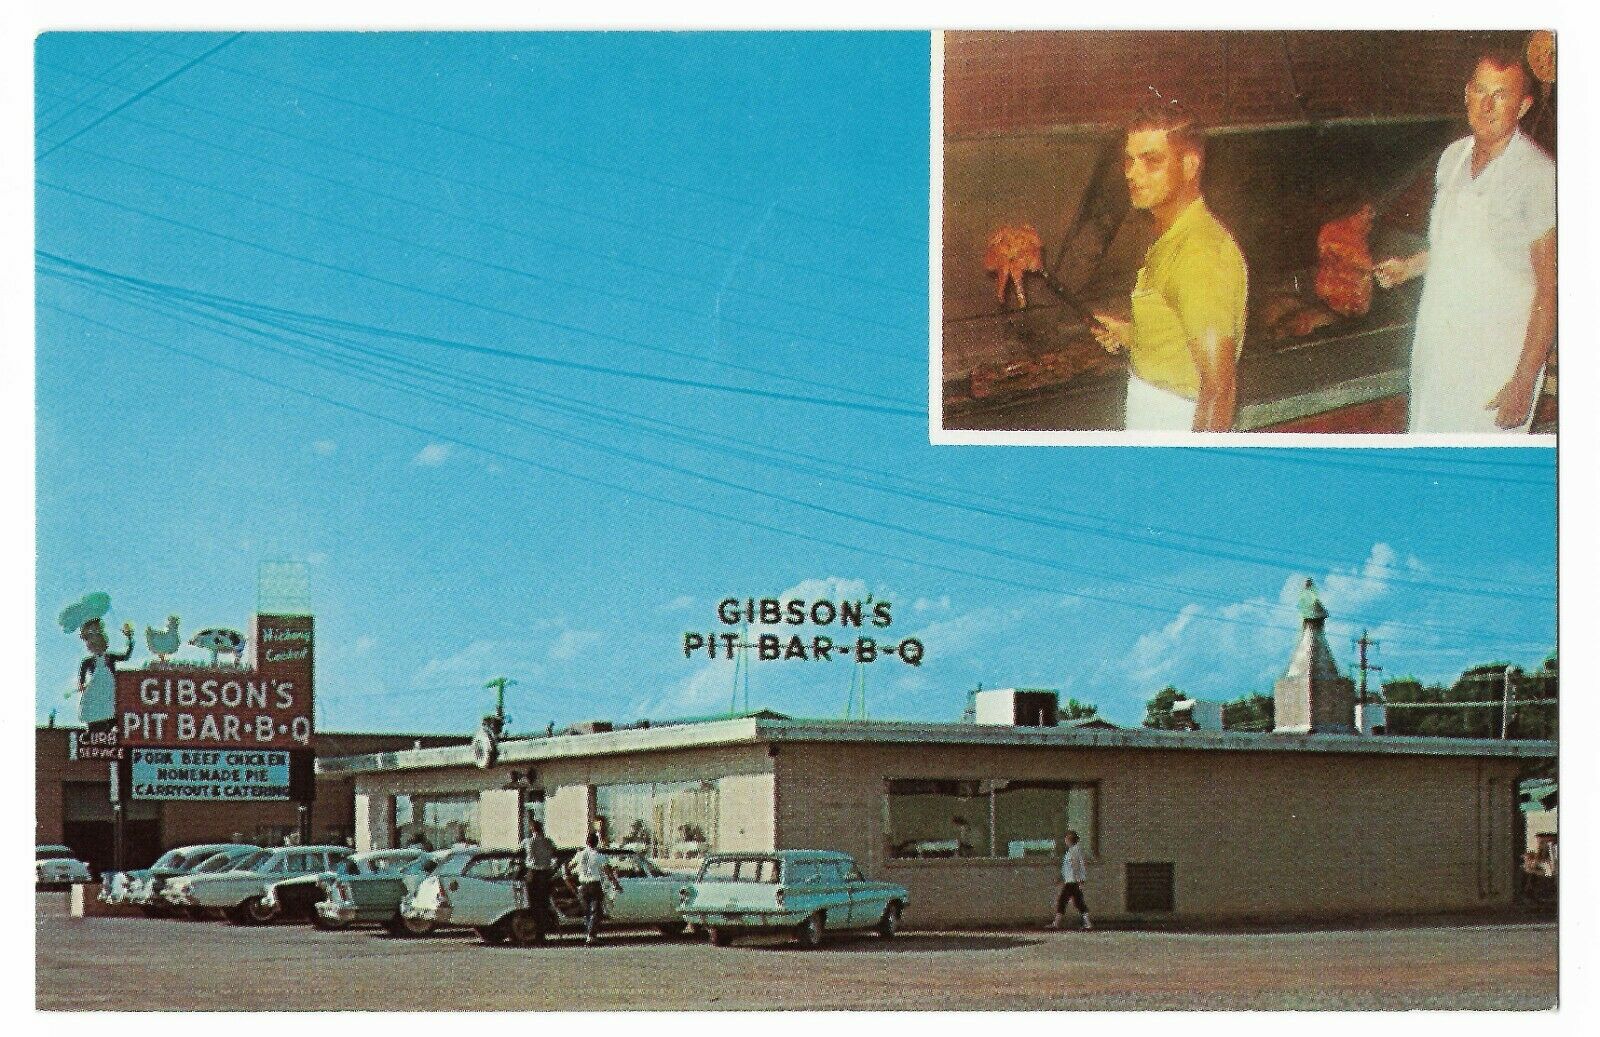 Ala. Gibson's Bar-b-q, Huntsville,alabama - Vintg Postcard - Roadside Americana